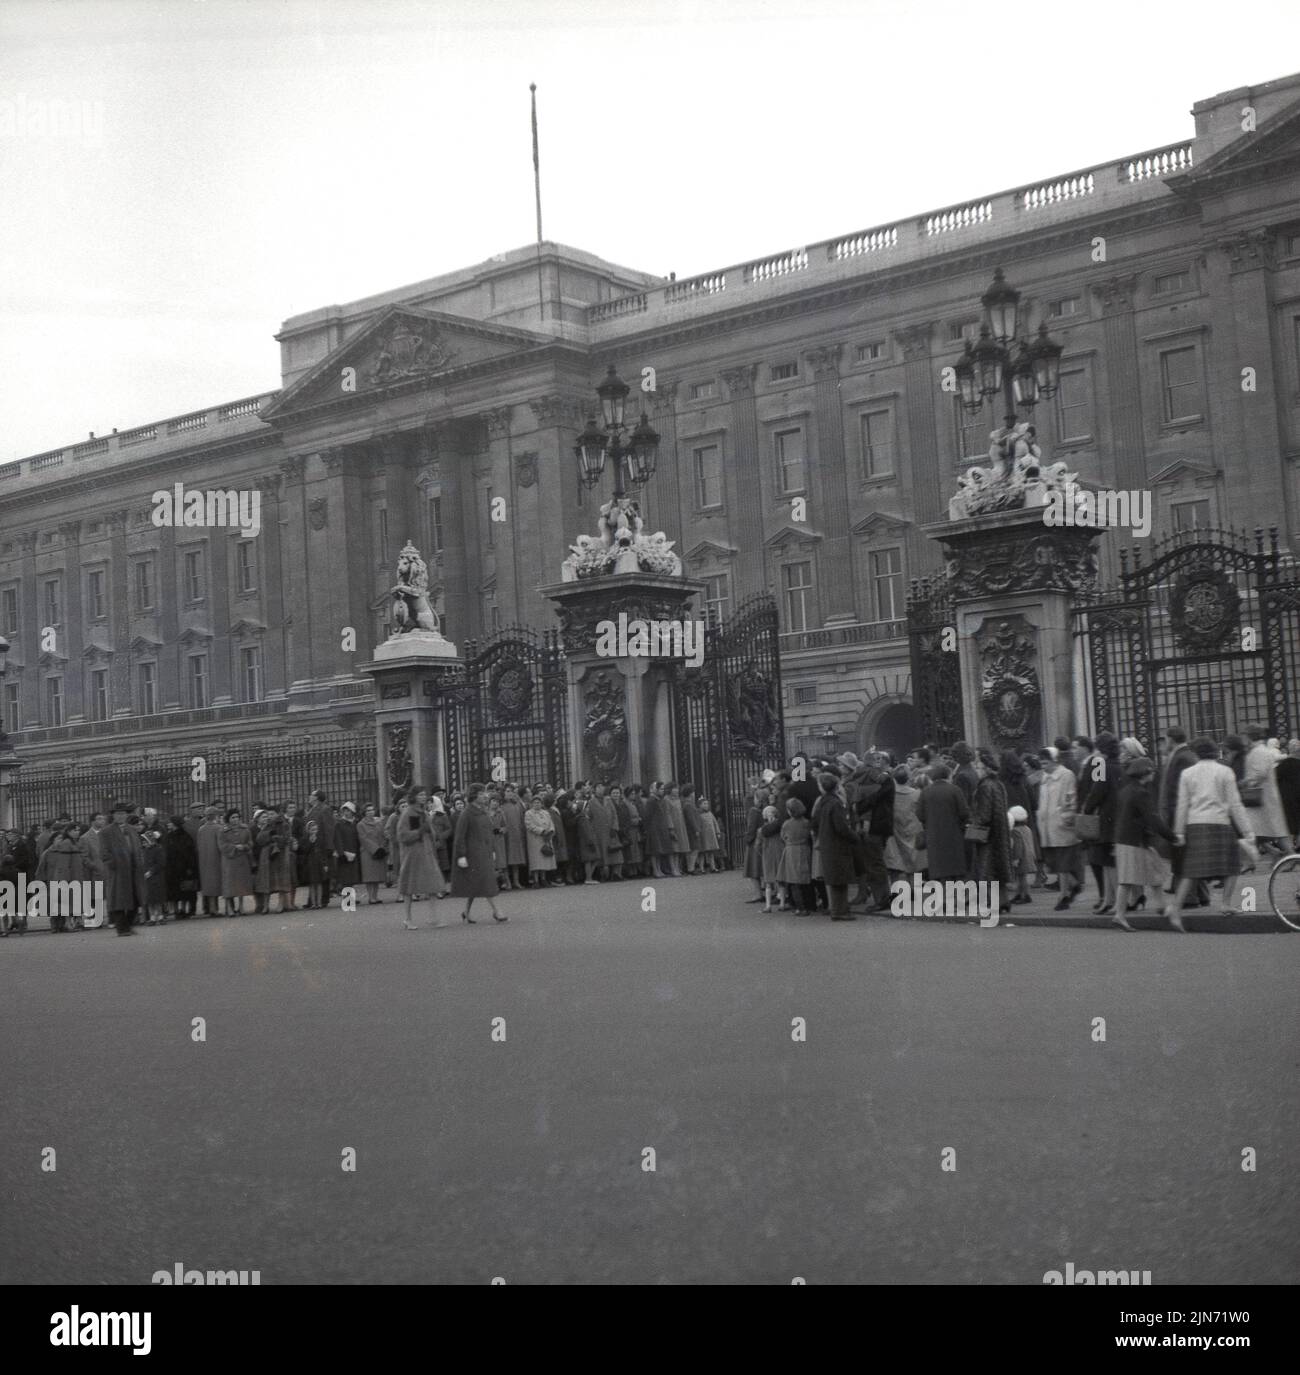 1950s, historical, large number of people gathered outside at the gates to Buckingham Palace, the London residence of the British Royal Family, London, England, UK. Stock Photo